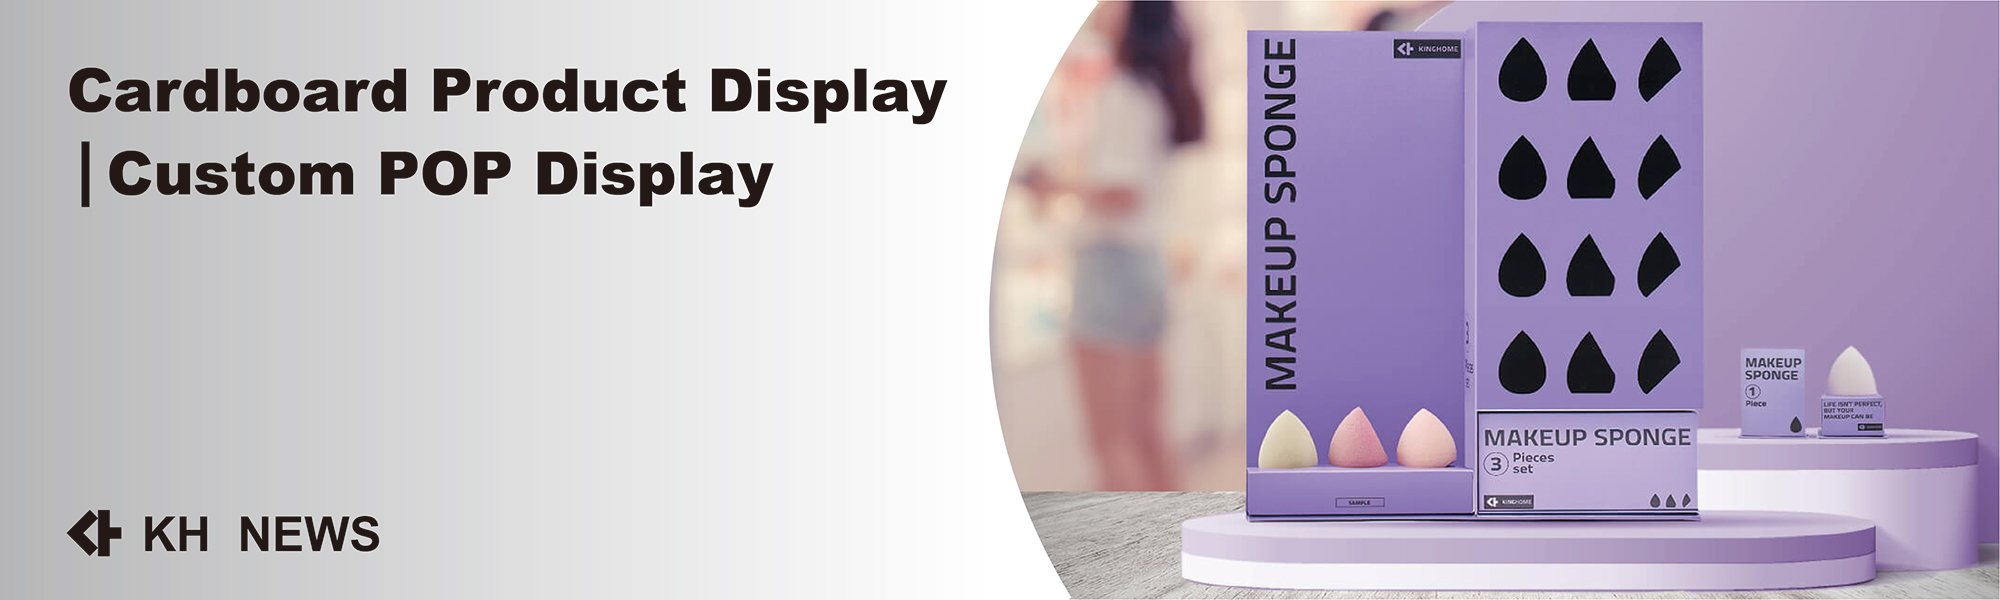 Cardboard Product Display | Custom POP Display